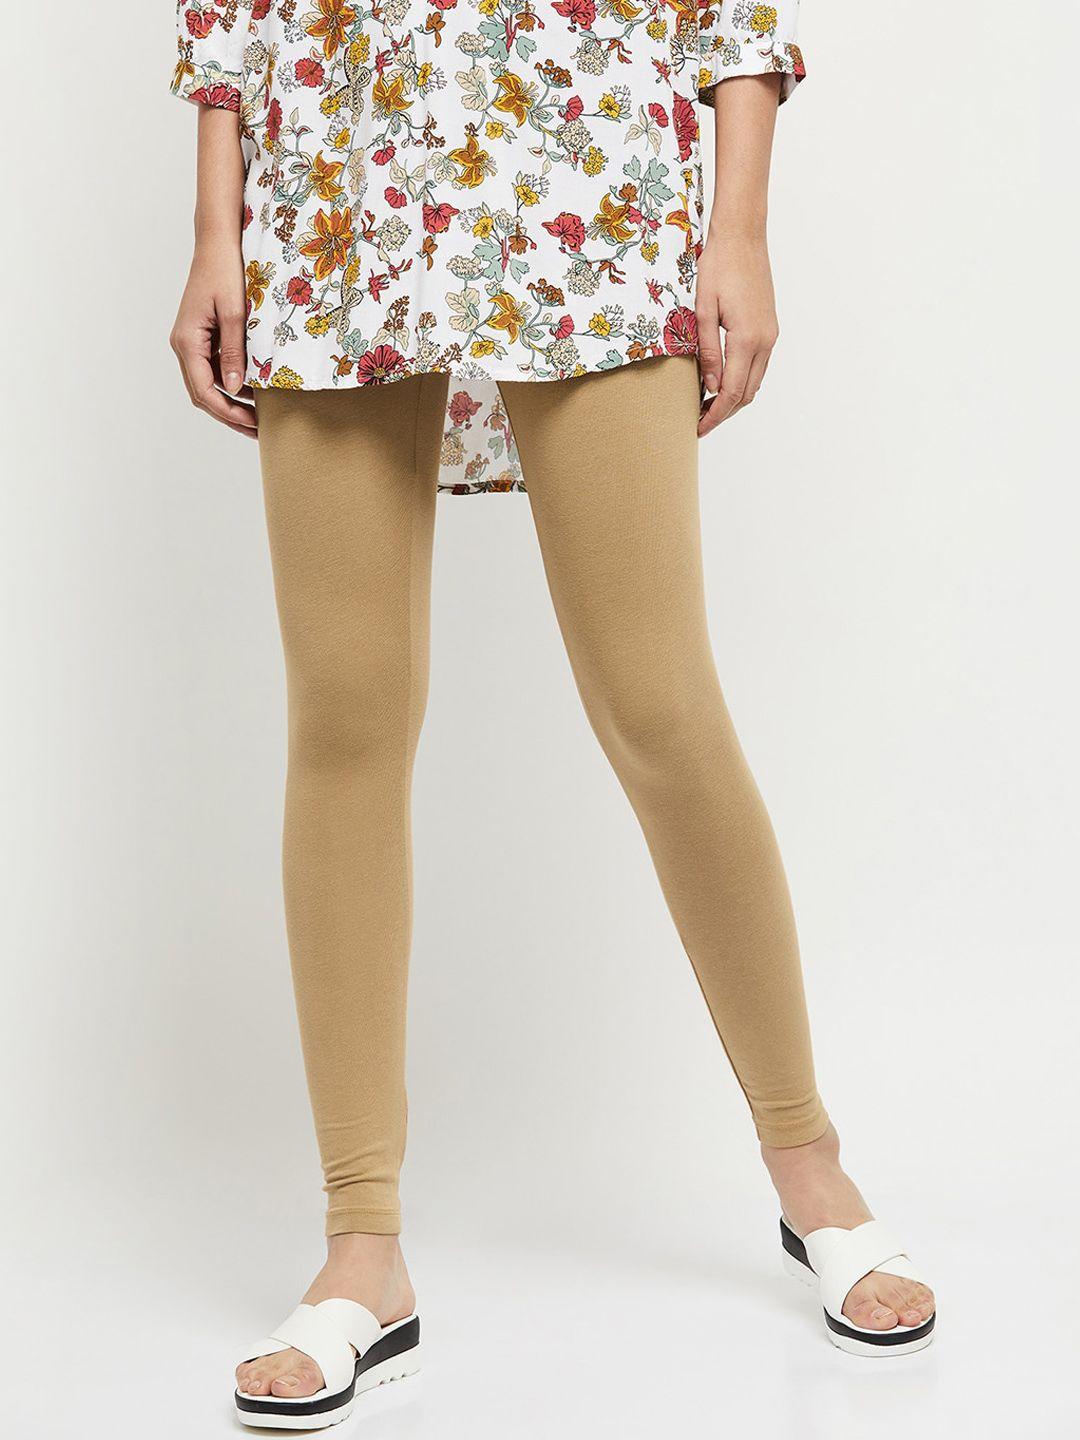 max women beige solid ankle-length leggings